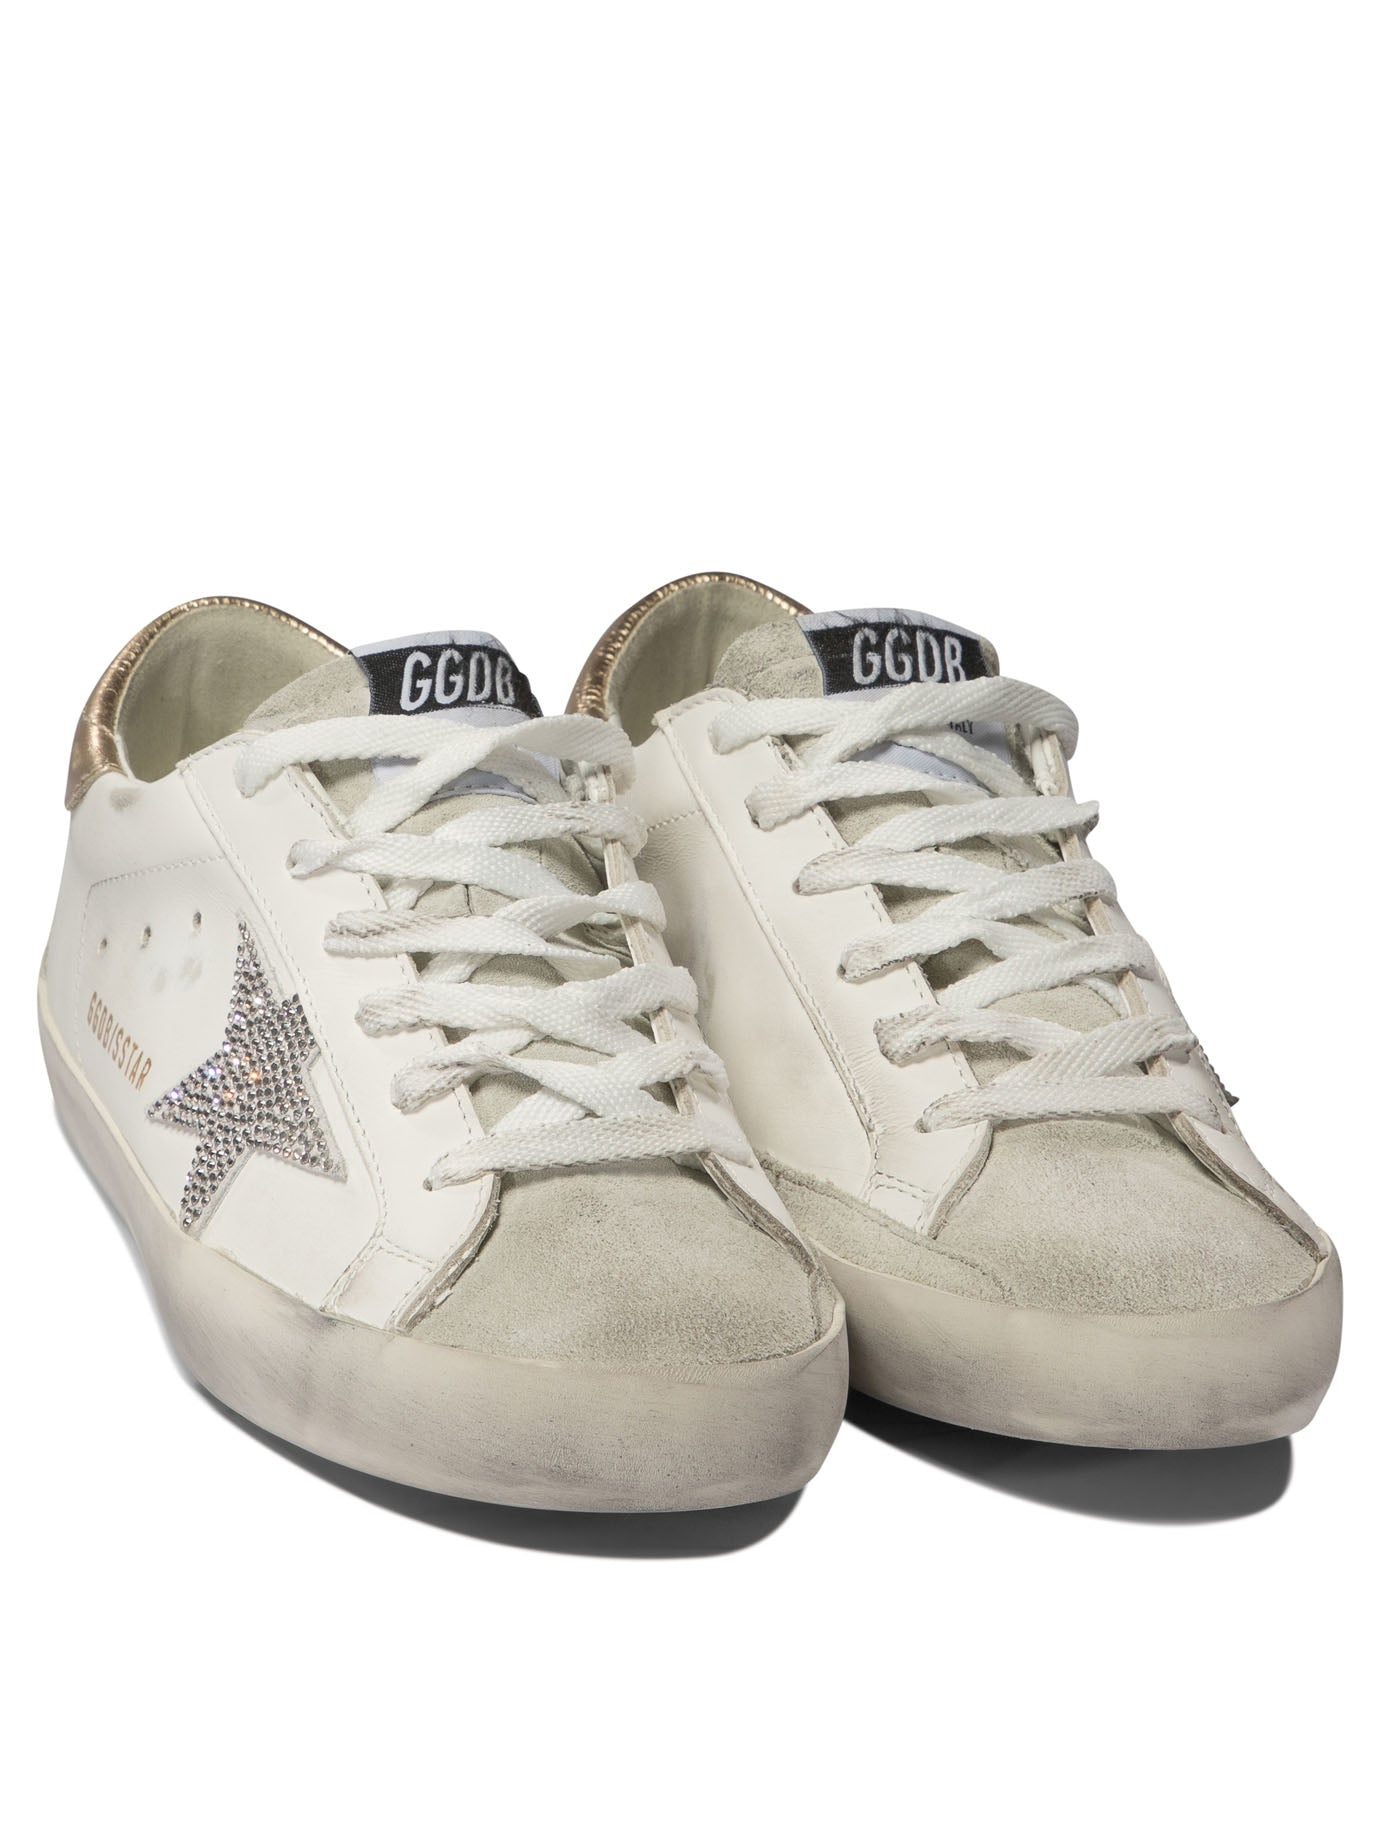 Golden Goose "Super Star Classic" Sneakers - 2